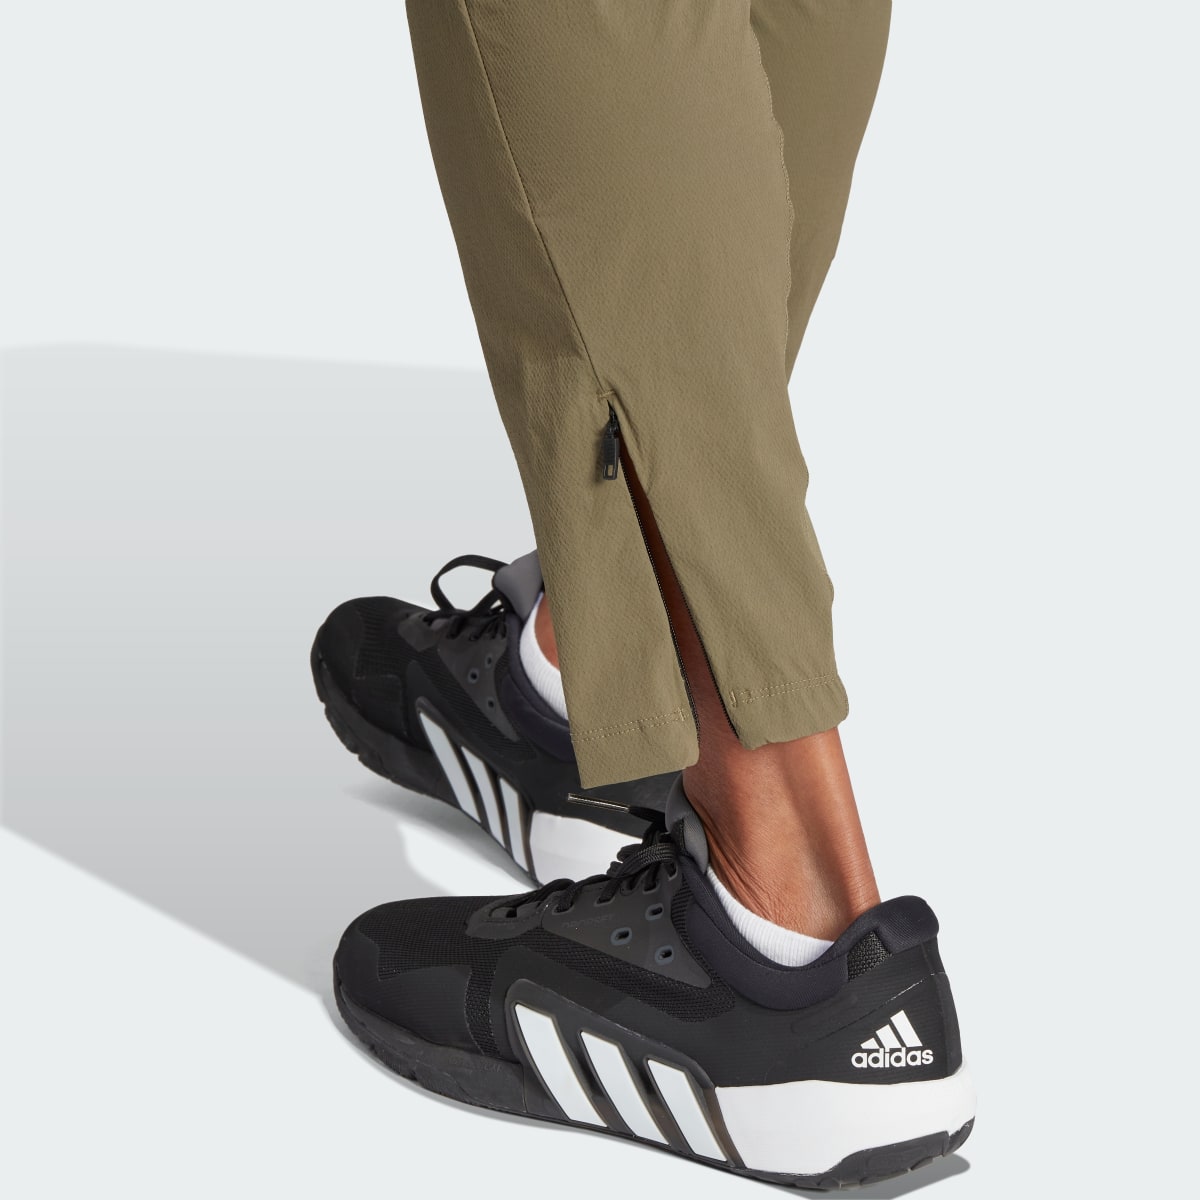 Adidas Designed for Training CORDURA Workout Pants. 7